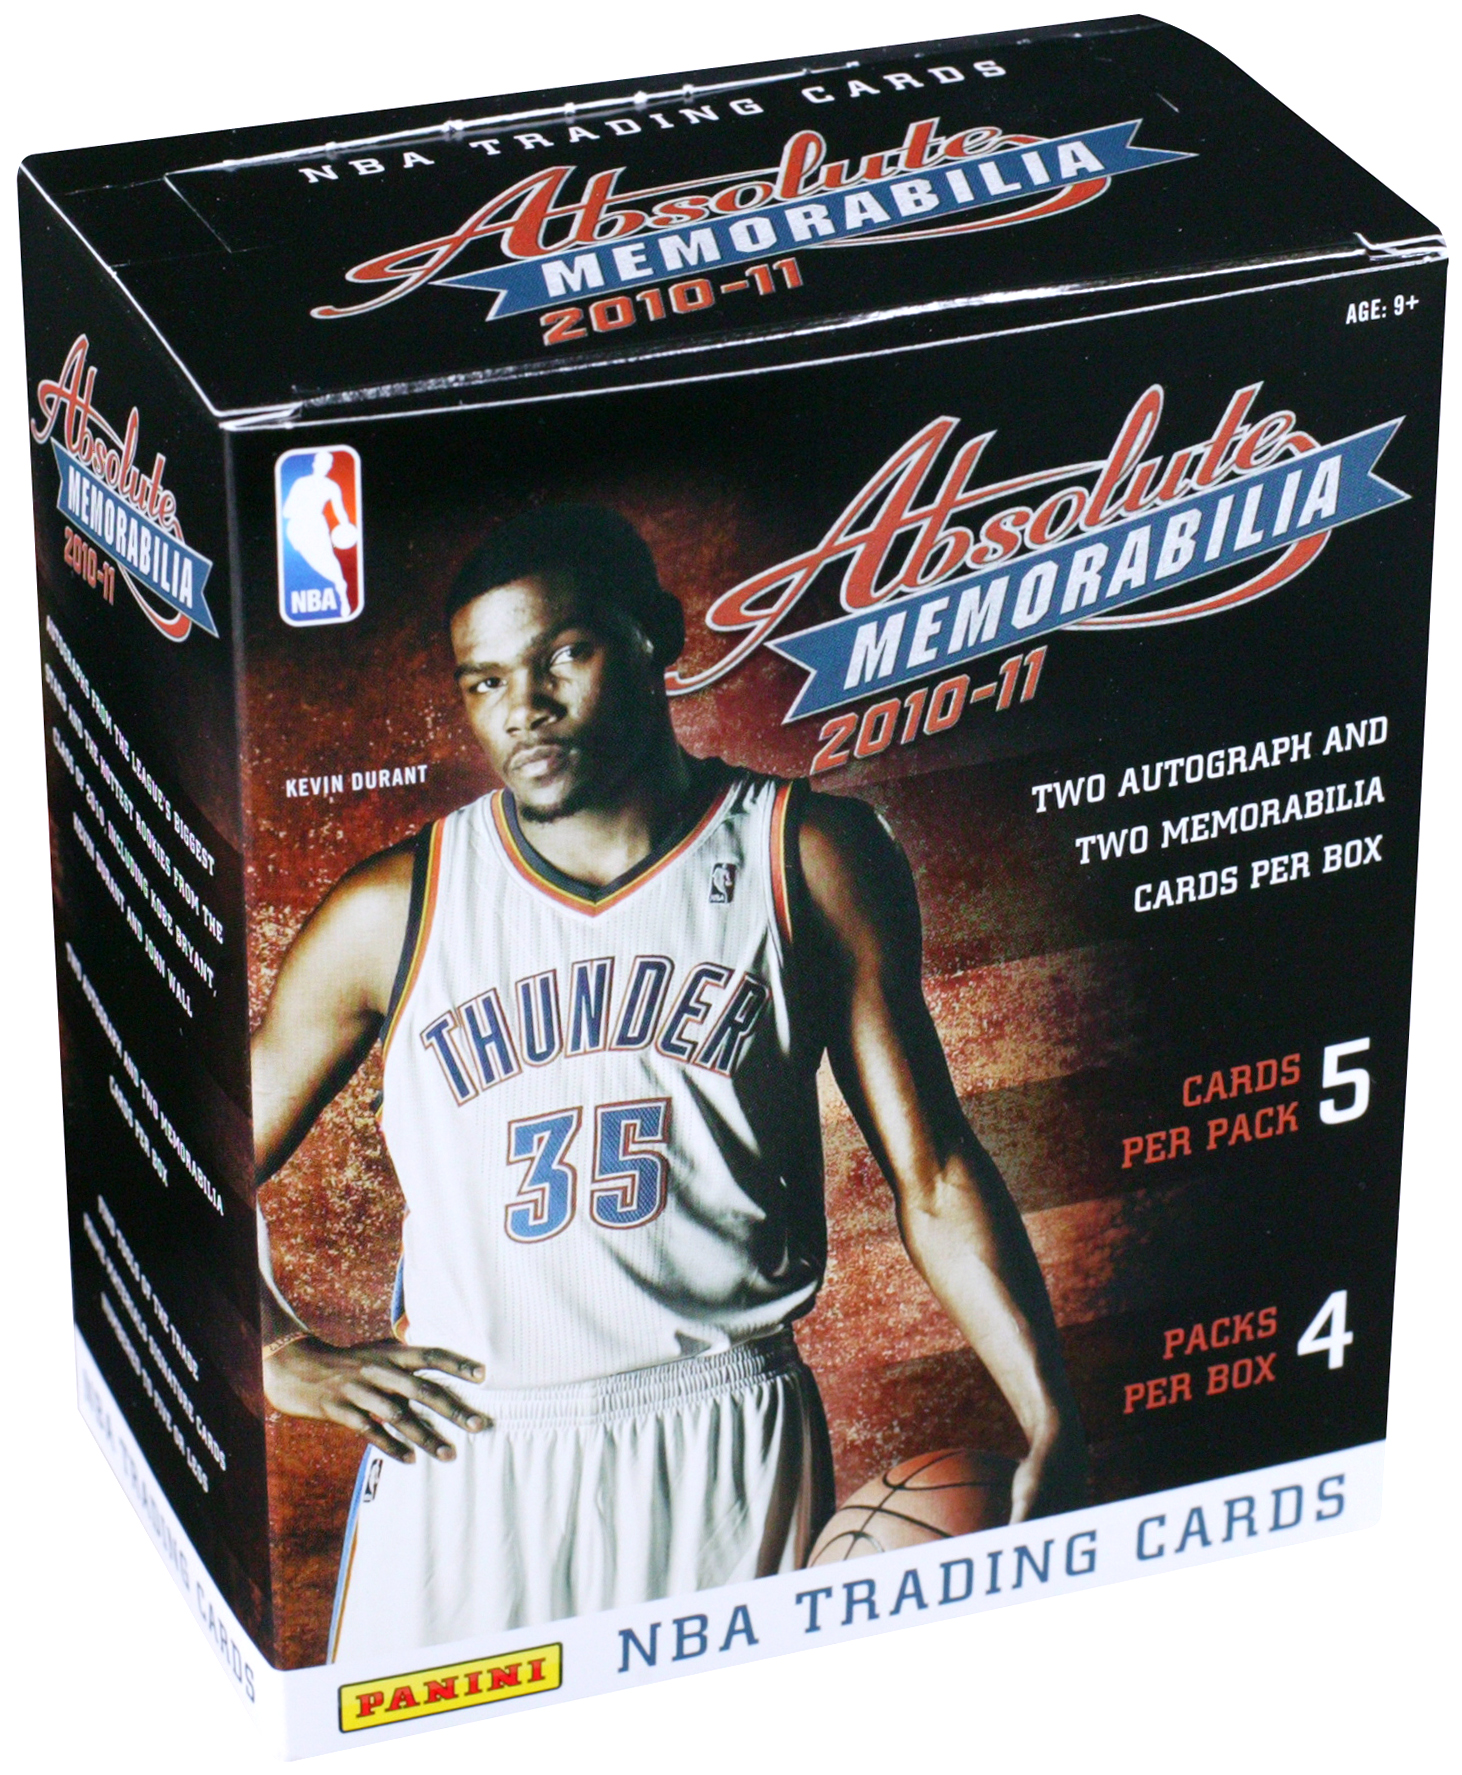 2010-11 Absolute Memorabilia Basketball Hobby Box card image